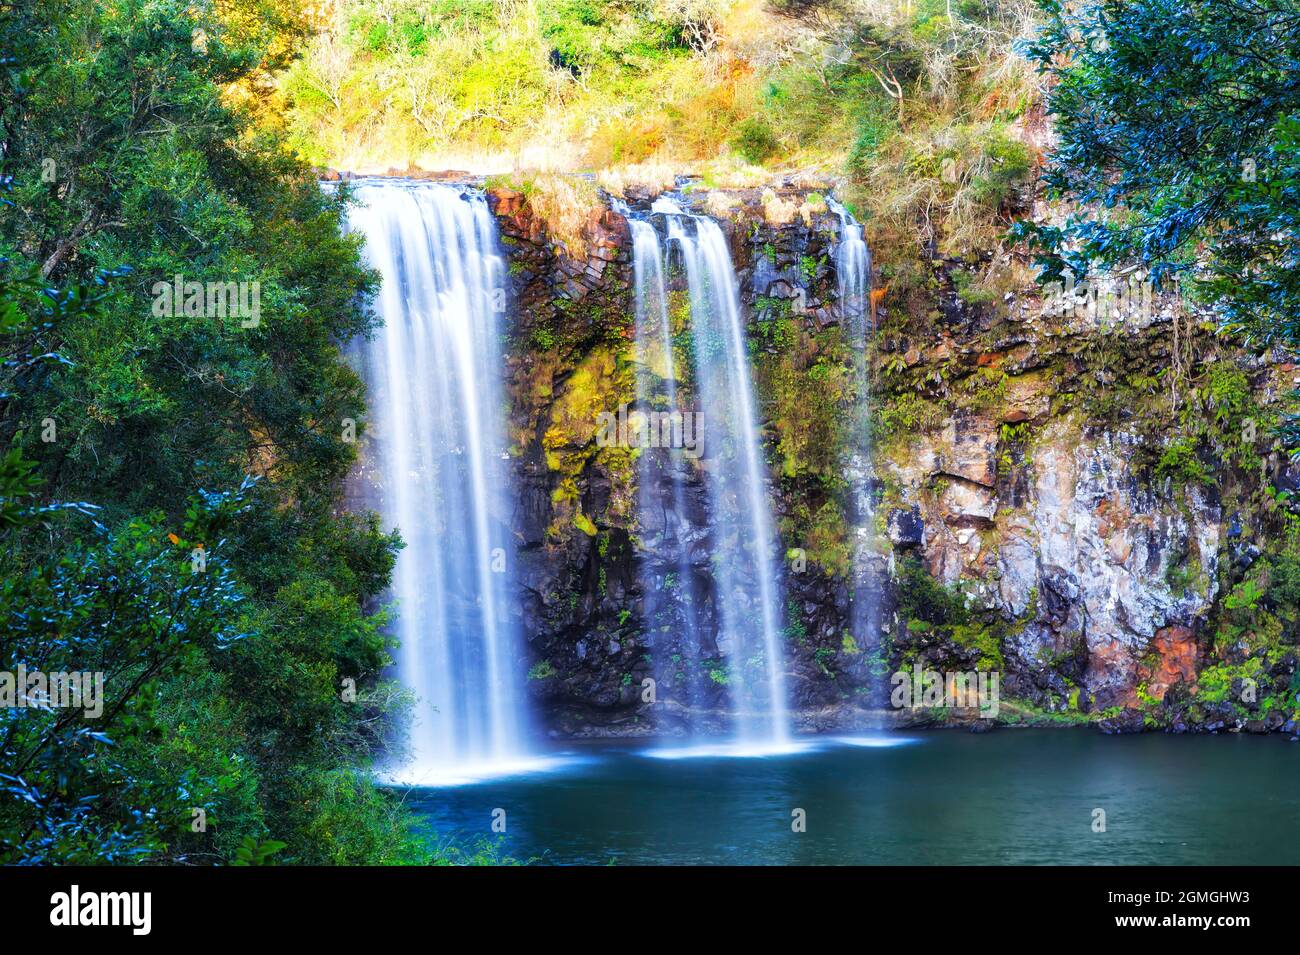 Scenic Dangar Falls waterfrall cascade in Dorrigo national park of Australia - gondwana rainforest. Stock Photo